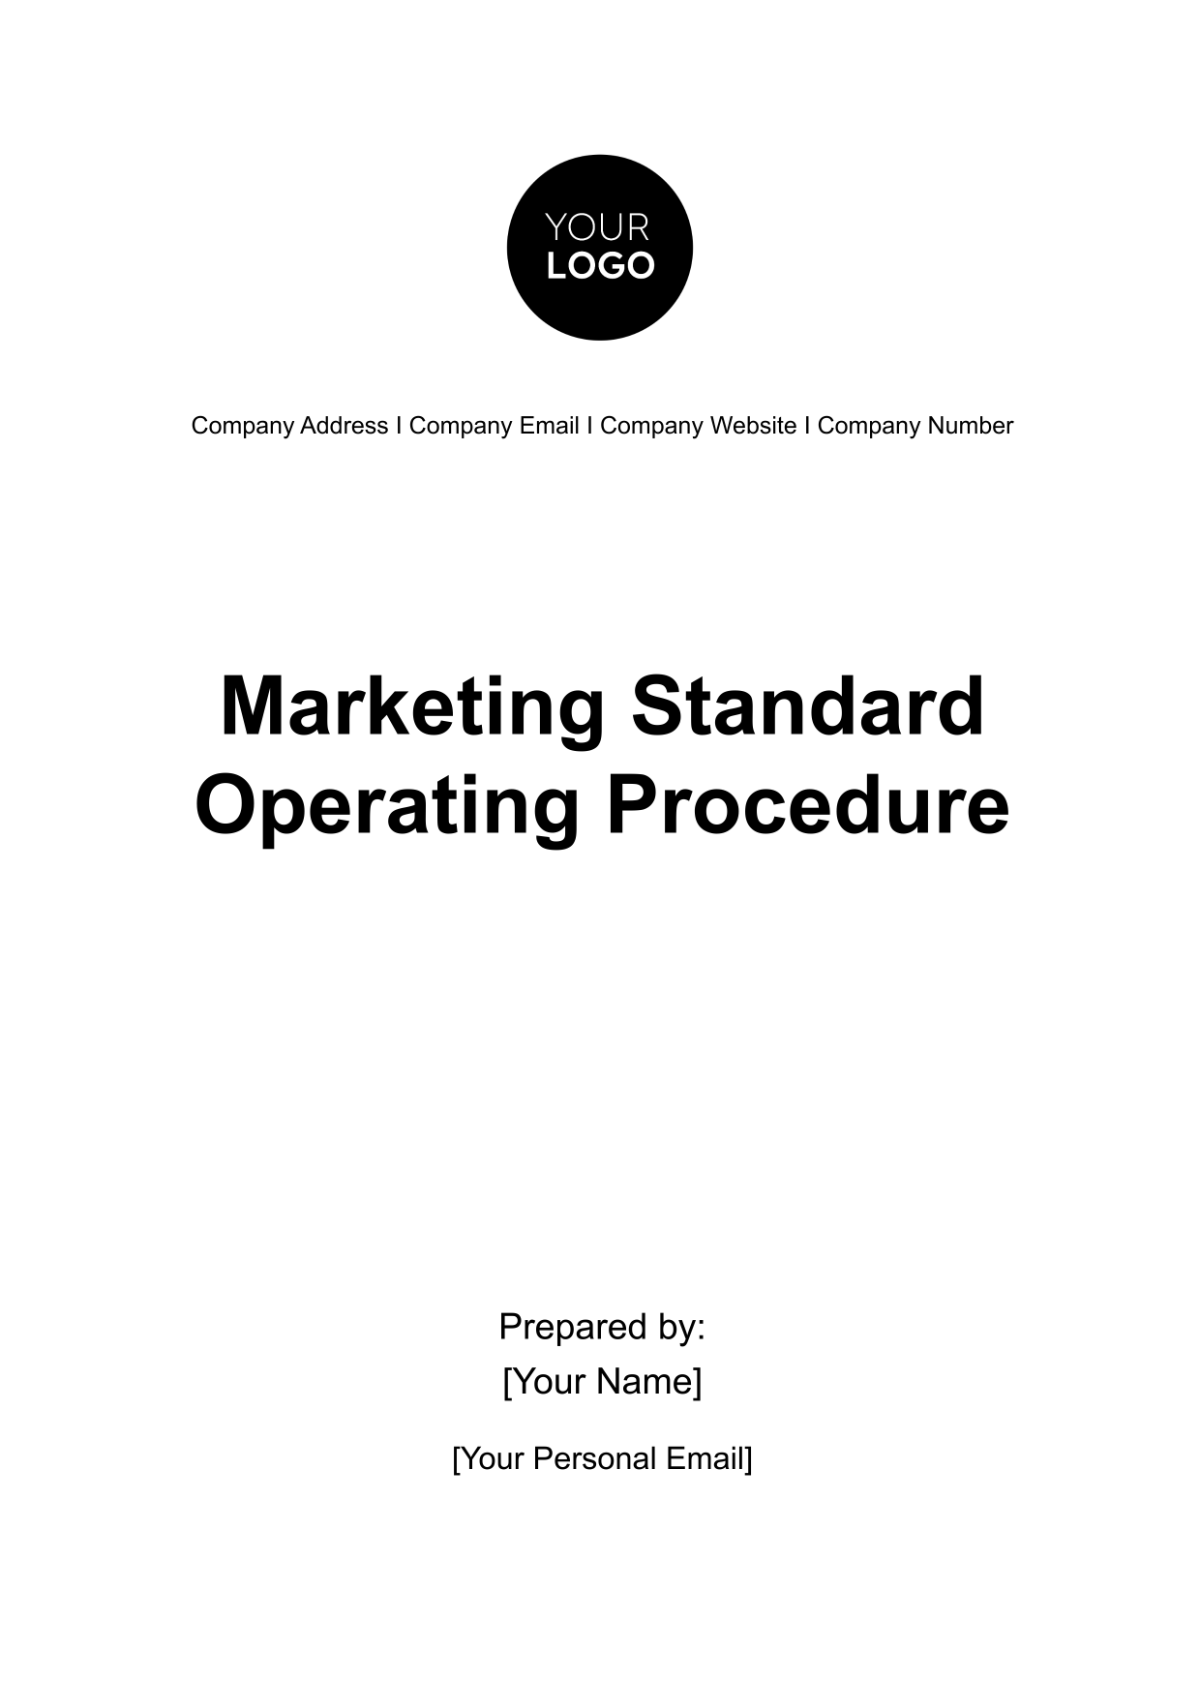 Marketing Standard Operating Procedure Template